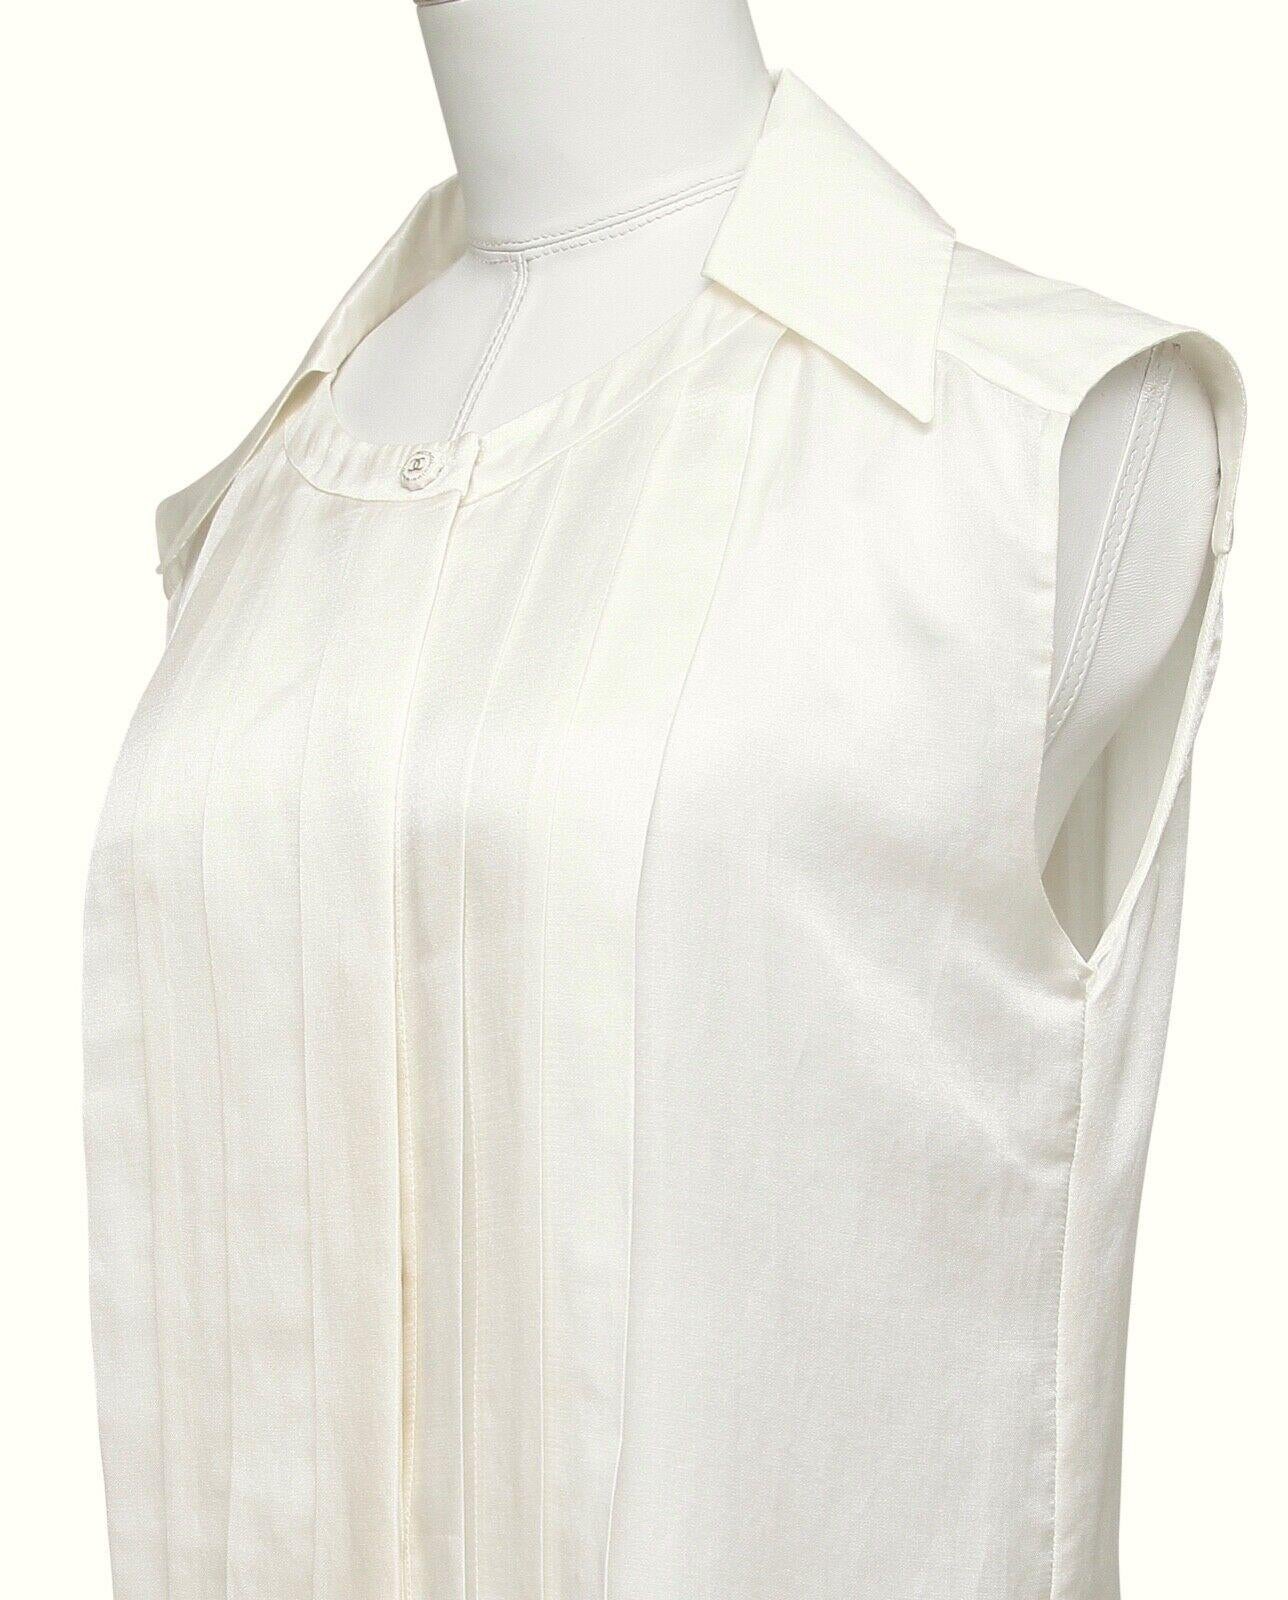 CHANEL Sleeveless Blouse Top Shirt Ivory Ecru Cotton Silk Pleats Collar Sz 44 4